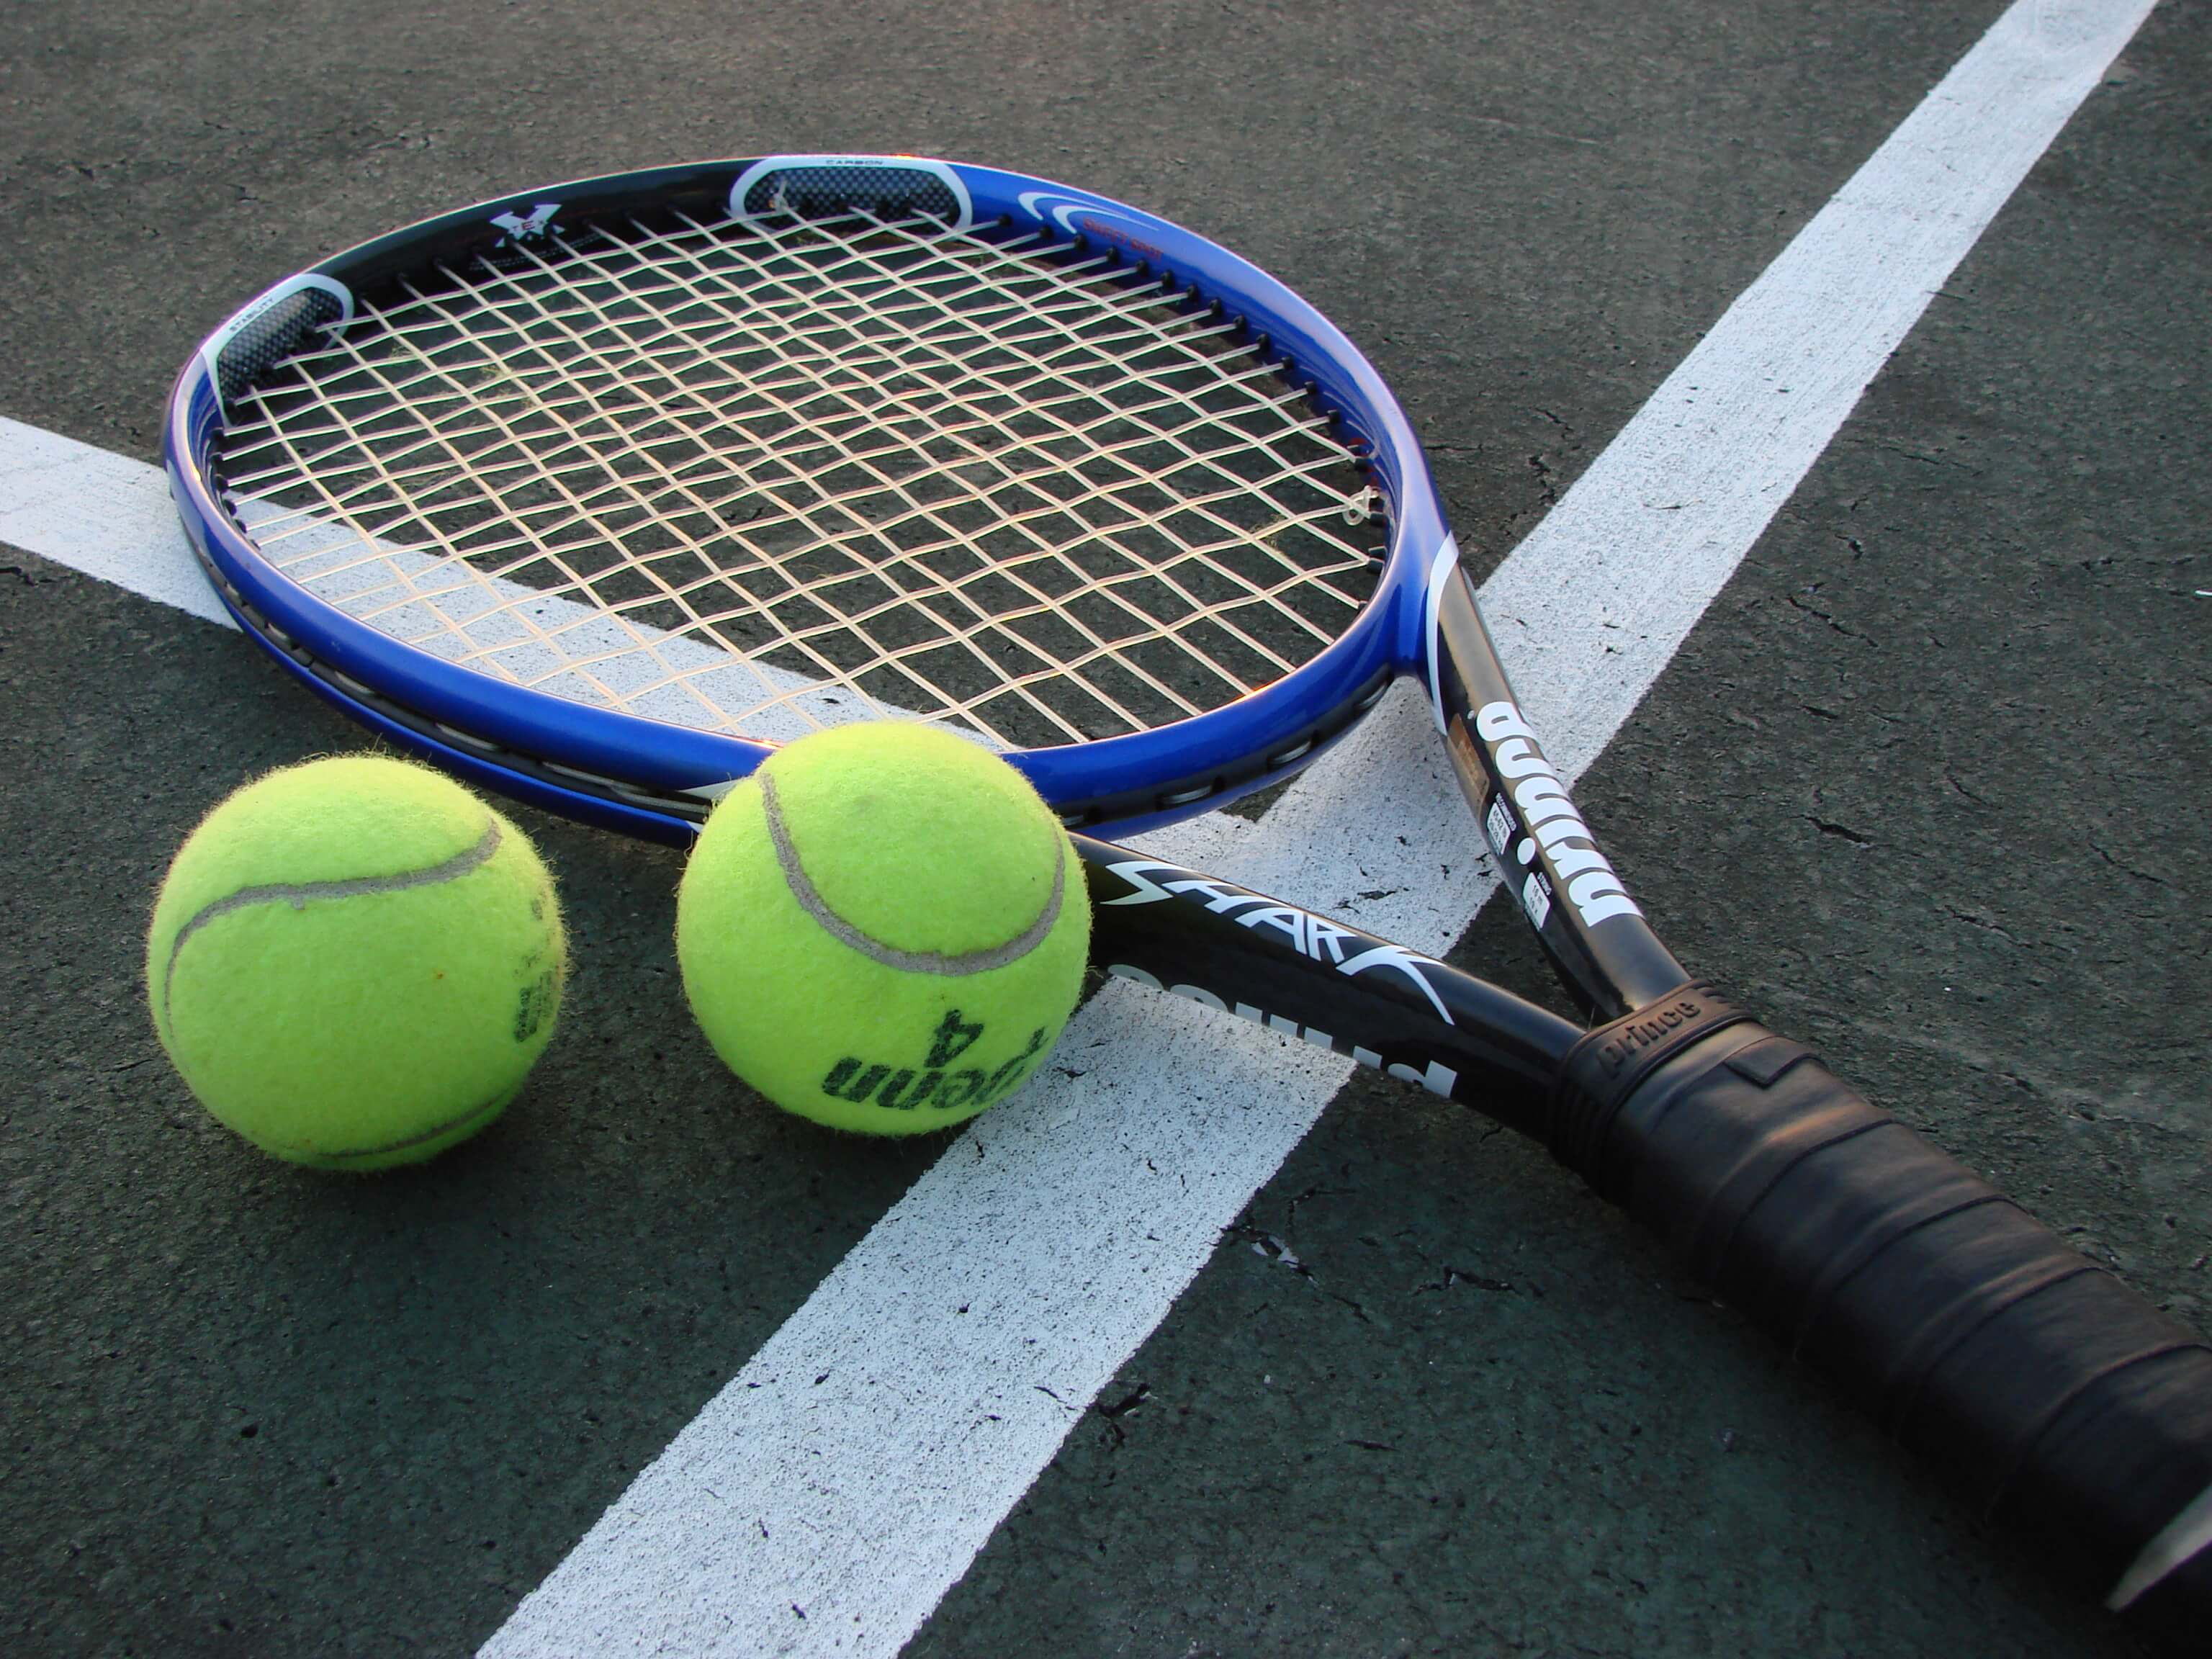 Tennis racket/raquet (เทนนิส แร็คเก็ต/แร็คเก็ต)